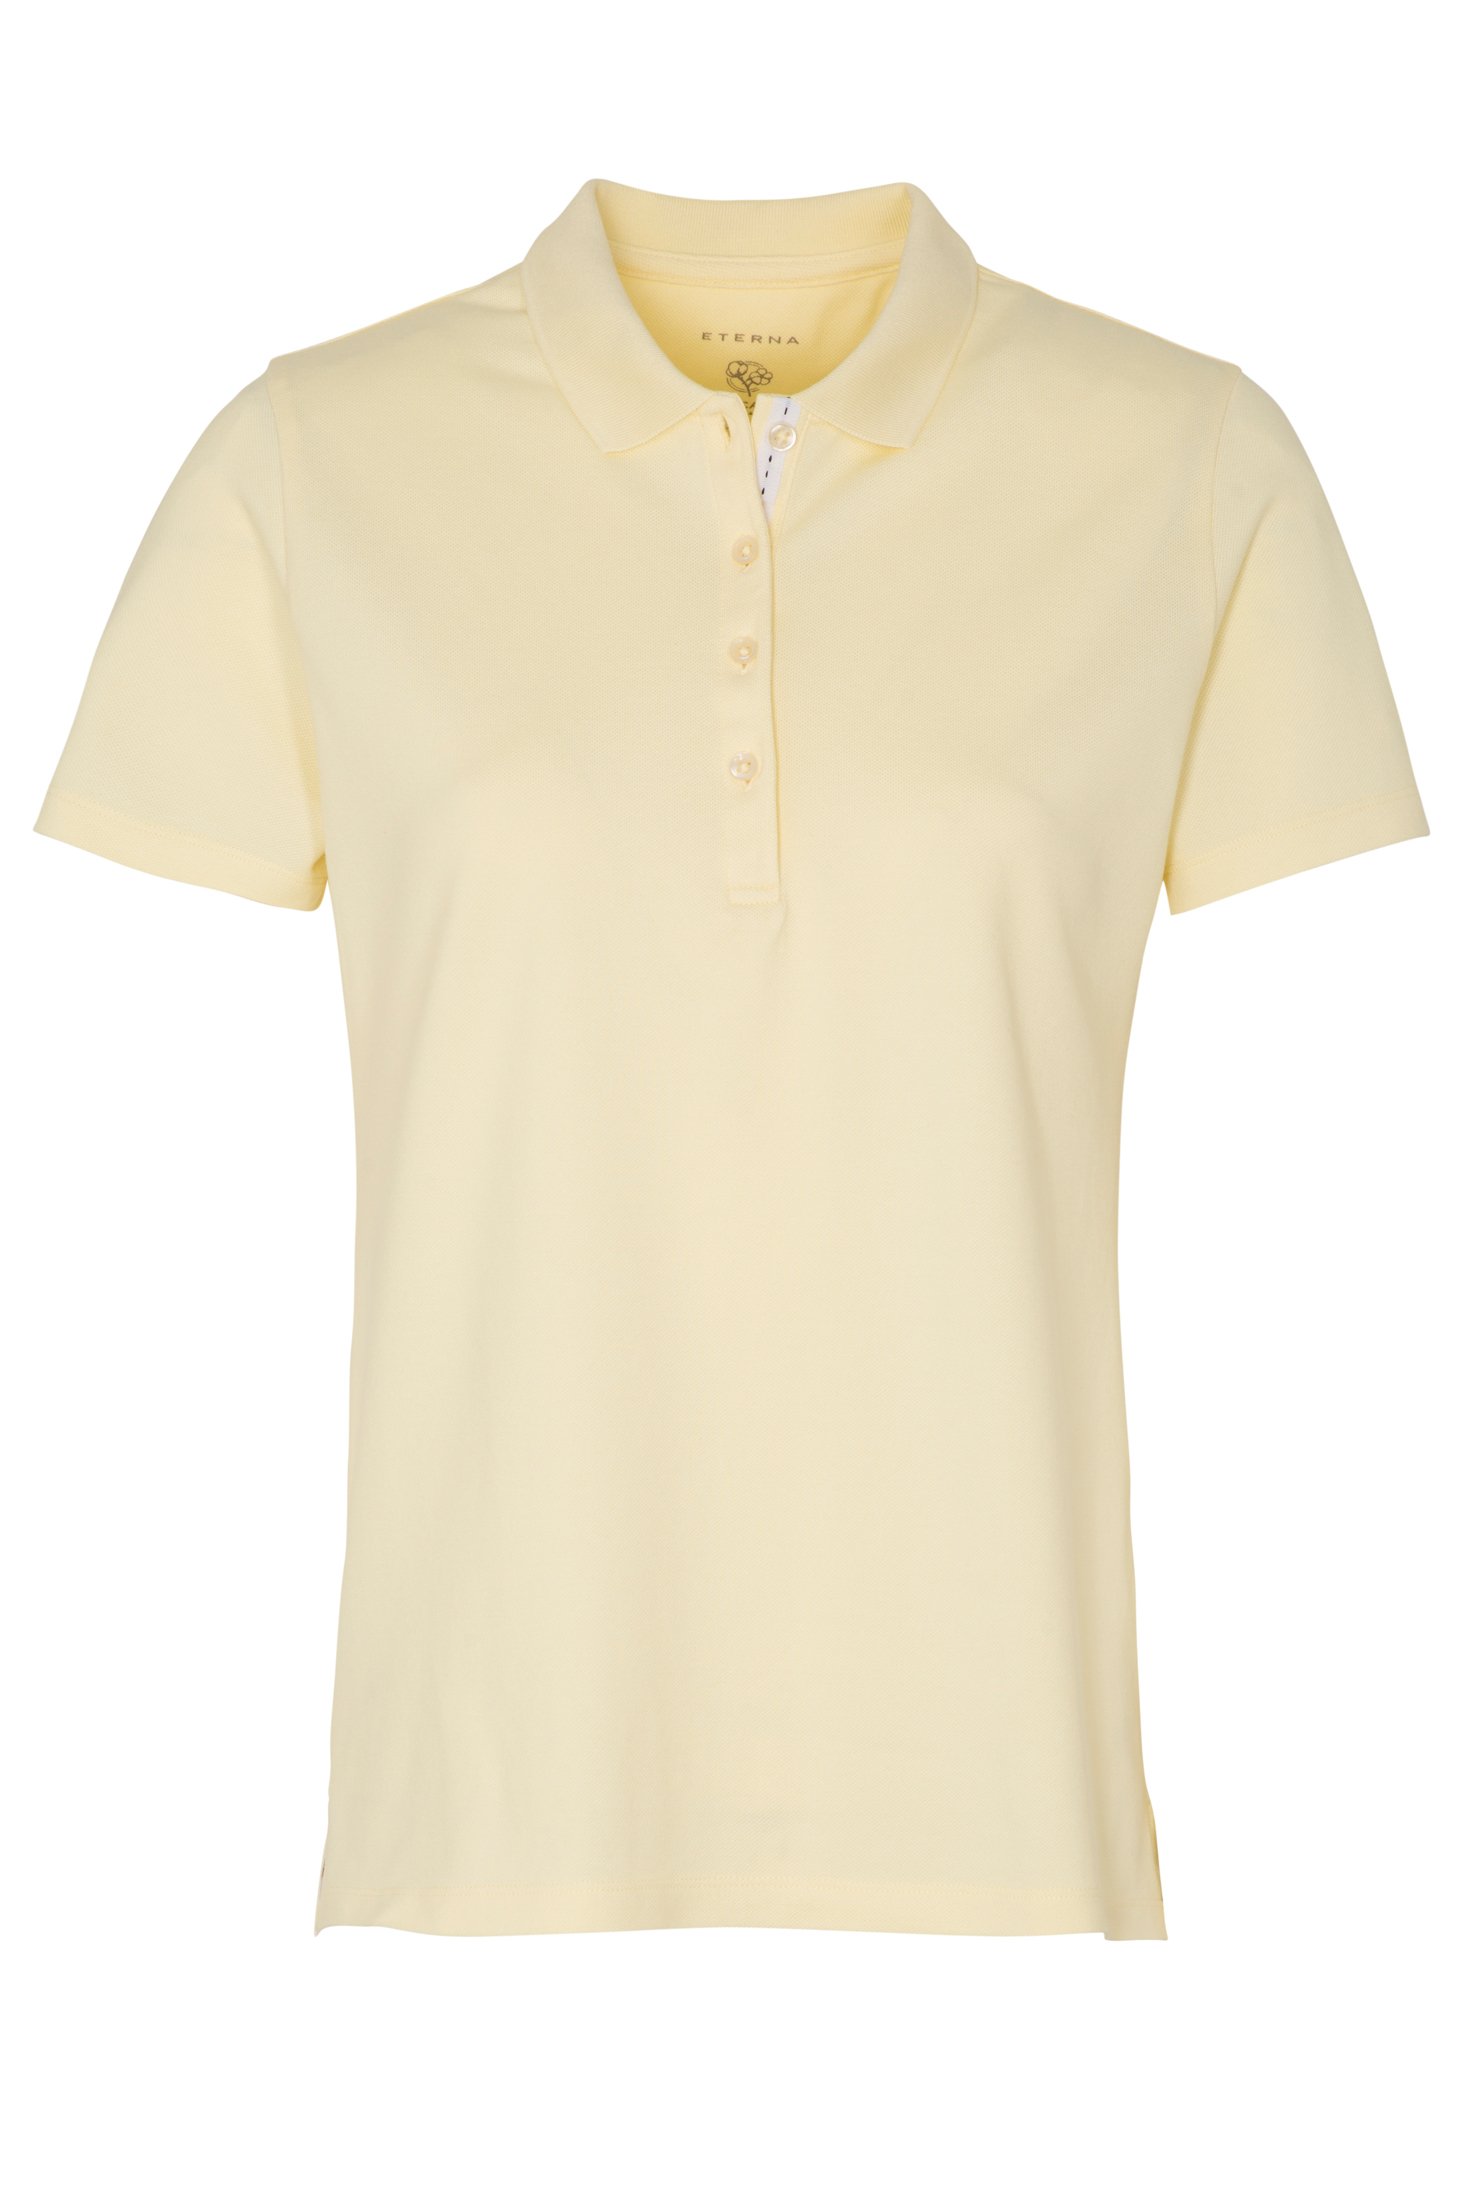 ETERNA CLASSIC Bekleidung gelb pique | Poloshirt | Damen Jeans-Manufaktur Eterna Poloshirts | 5535-72-H530 FIT 